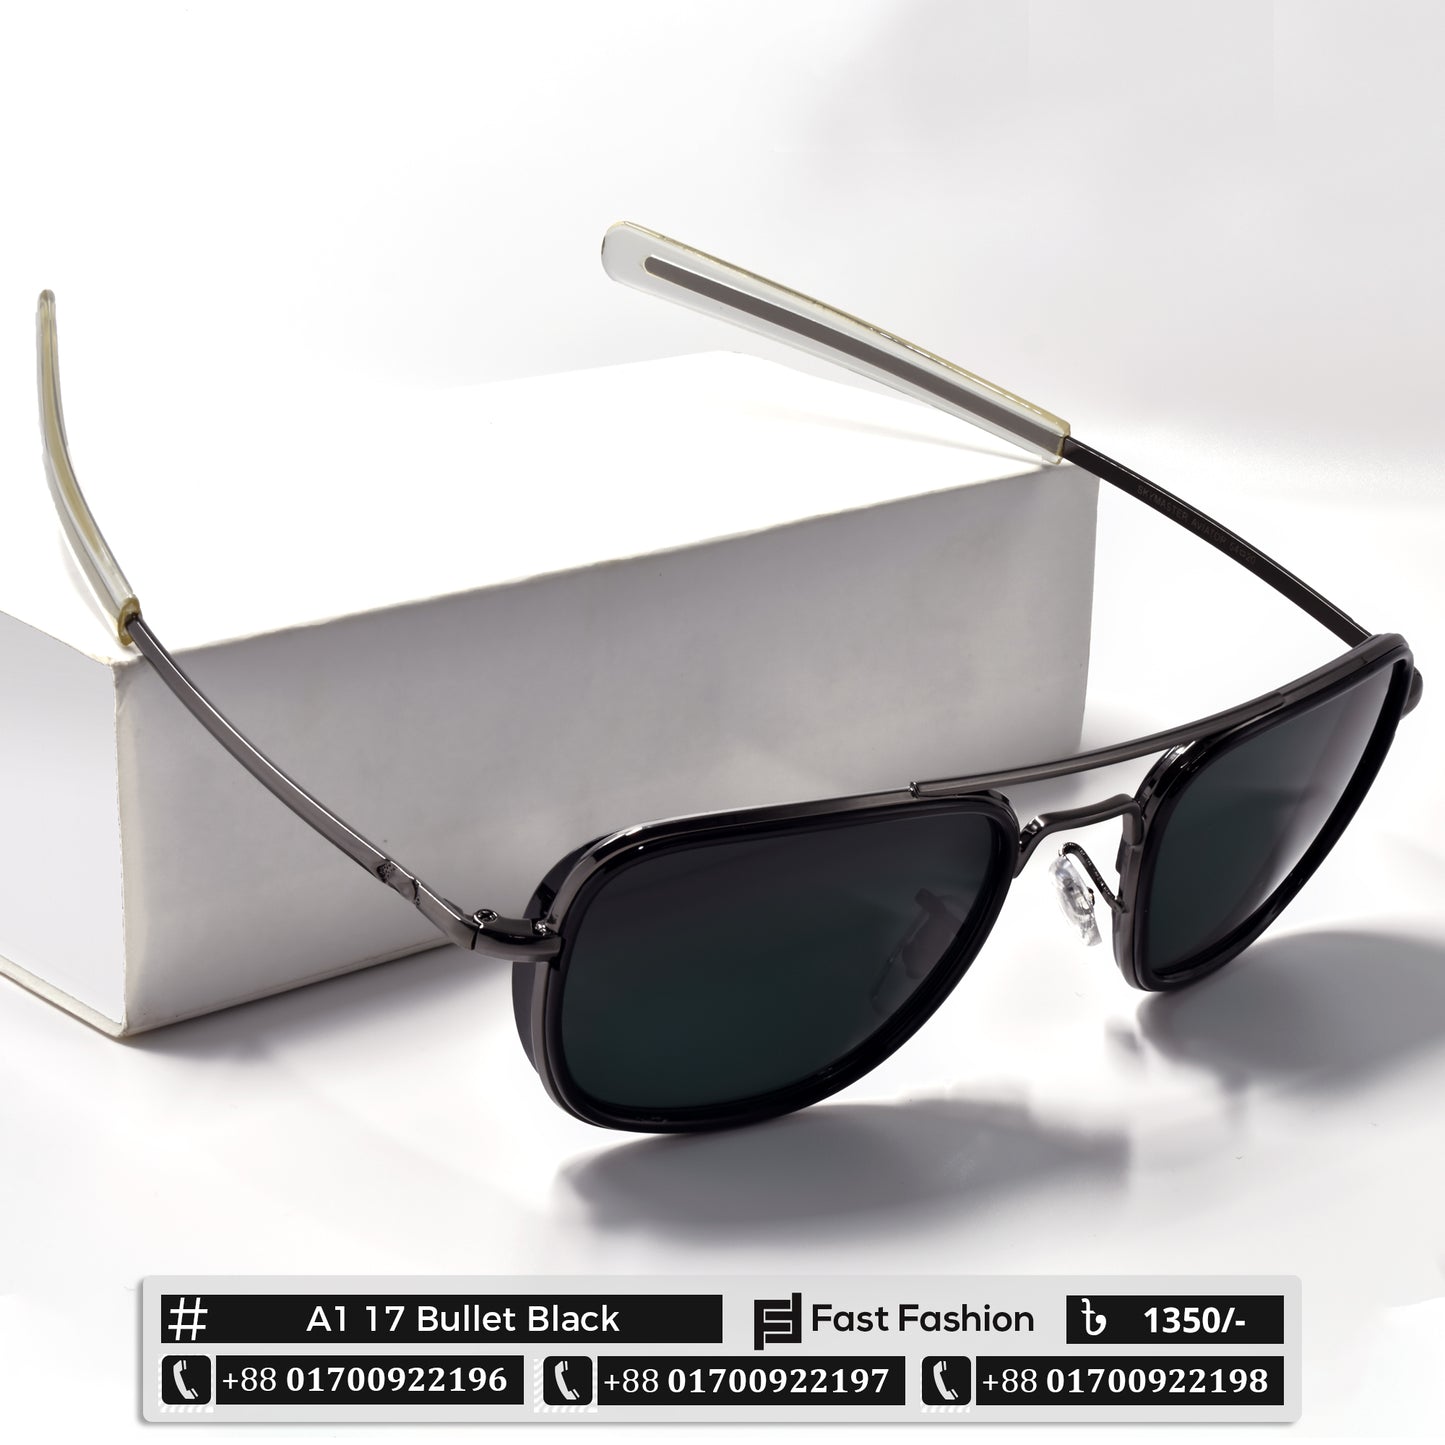 New Pilot Shape AO Design Sunglass for Men | A1 17 Bullet Black | New Arrival